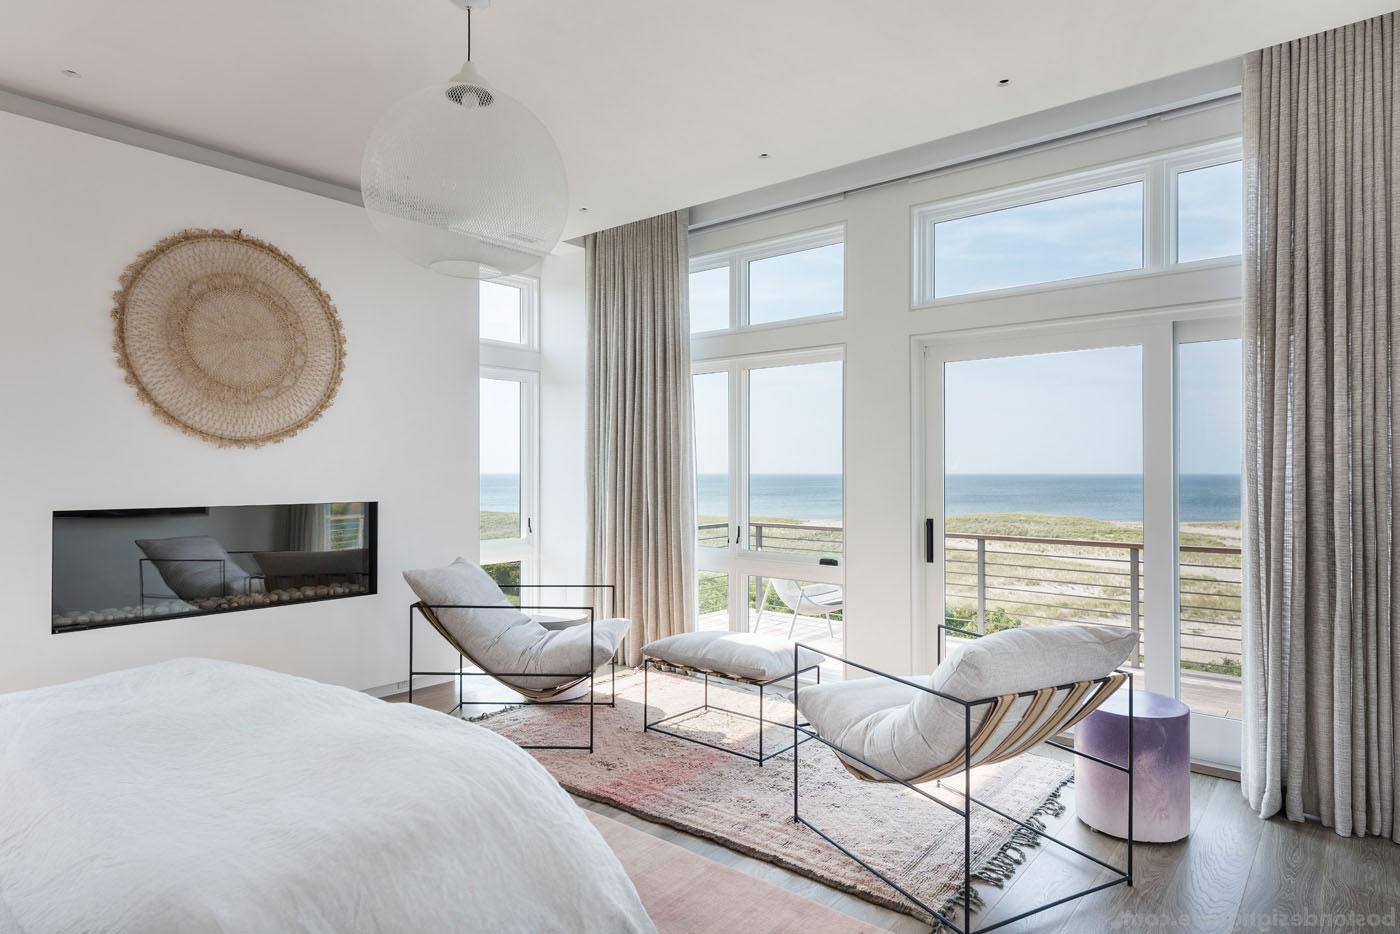 Master bedroom of an organic beach house designed by Lindsay Bentis of Lindsay Bentis的帖子